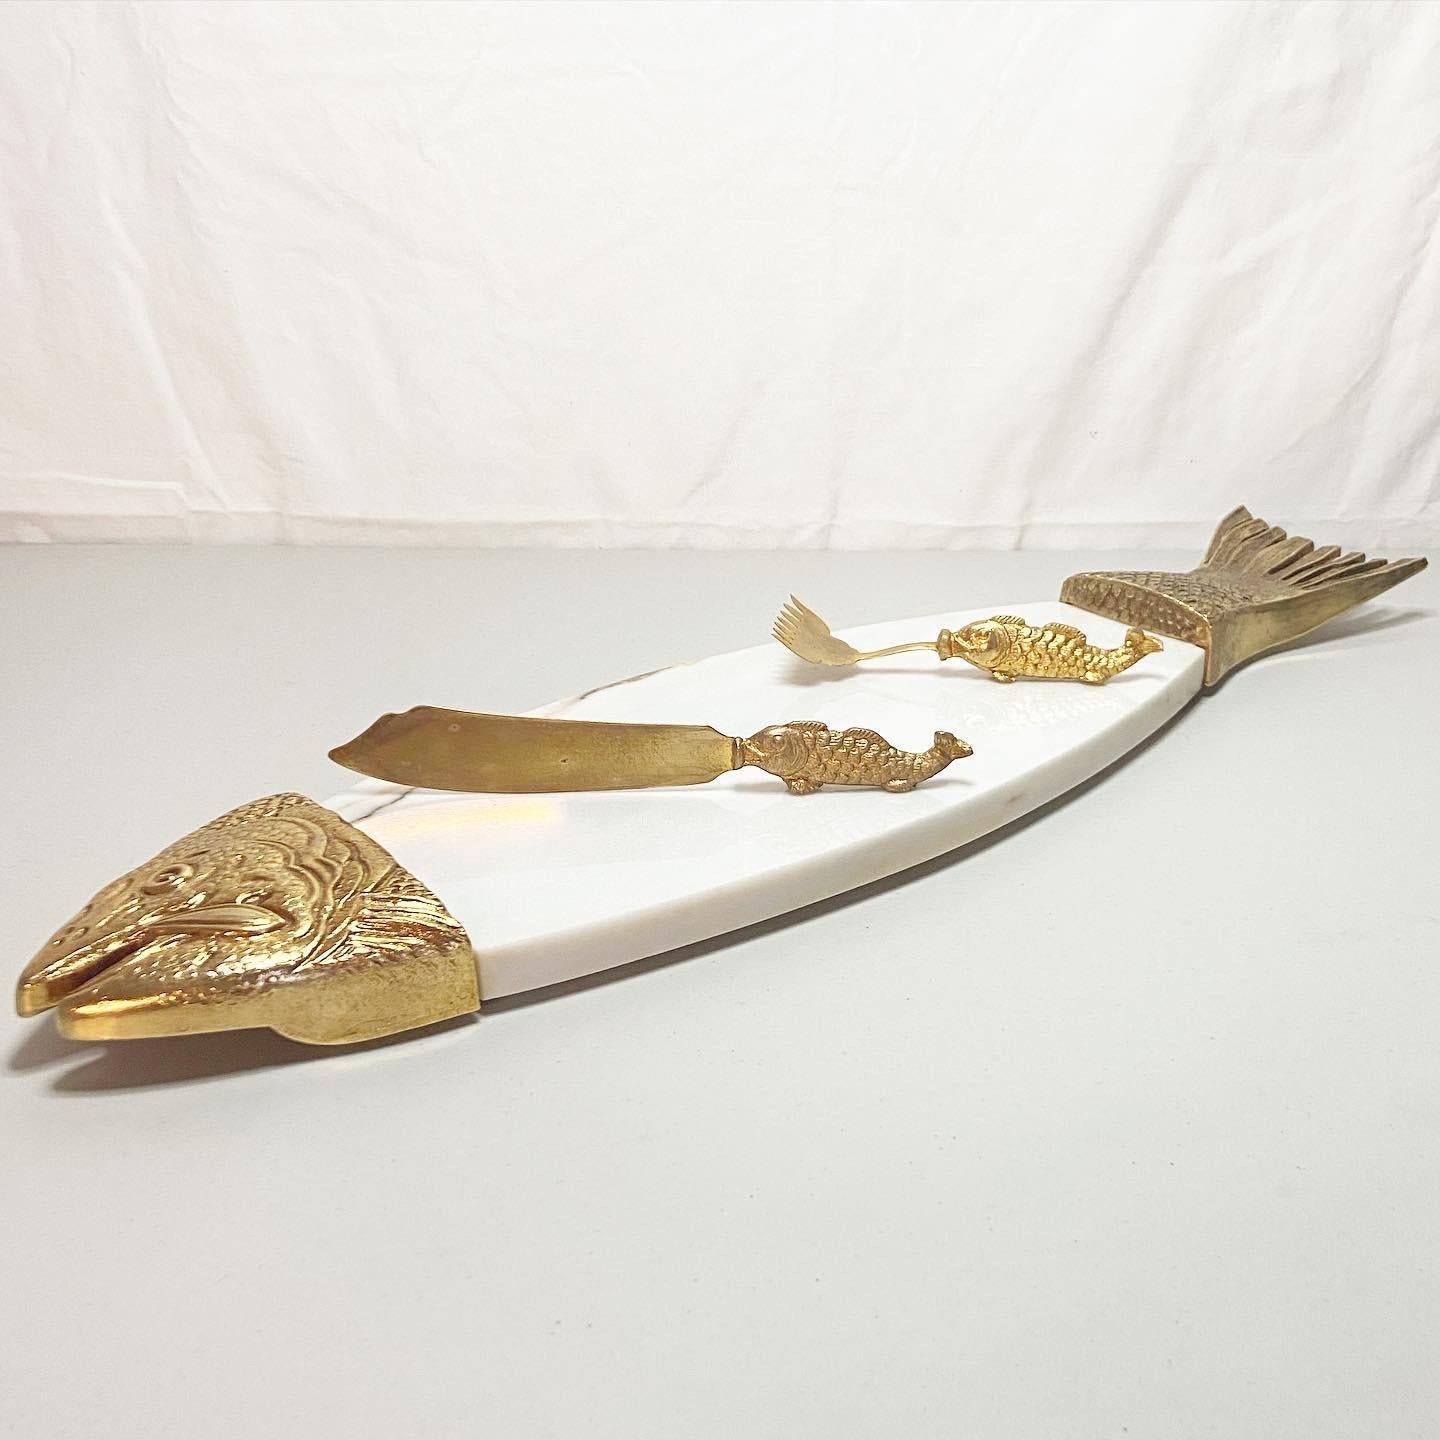 Elegant marble & brass fish serving platter with matching brass knife and fork.

Knife measures 9”L
Fork measures 6.5”L.